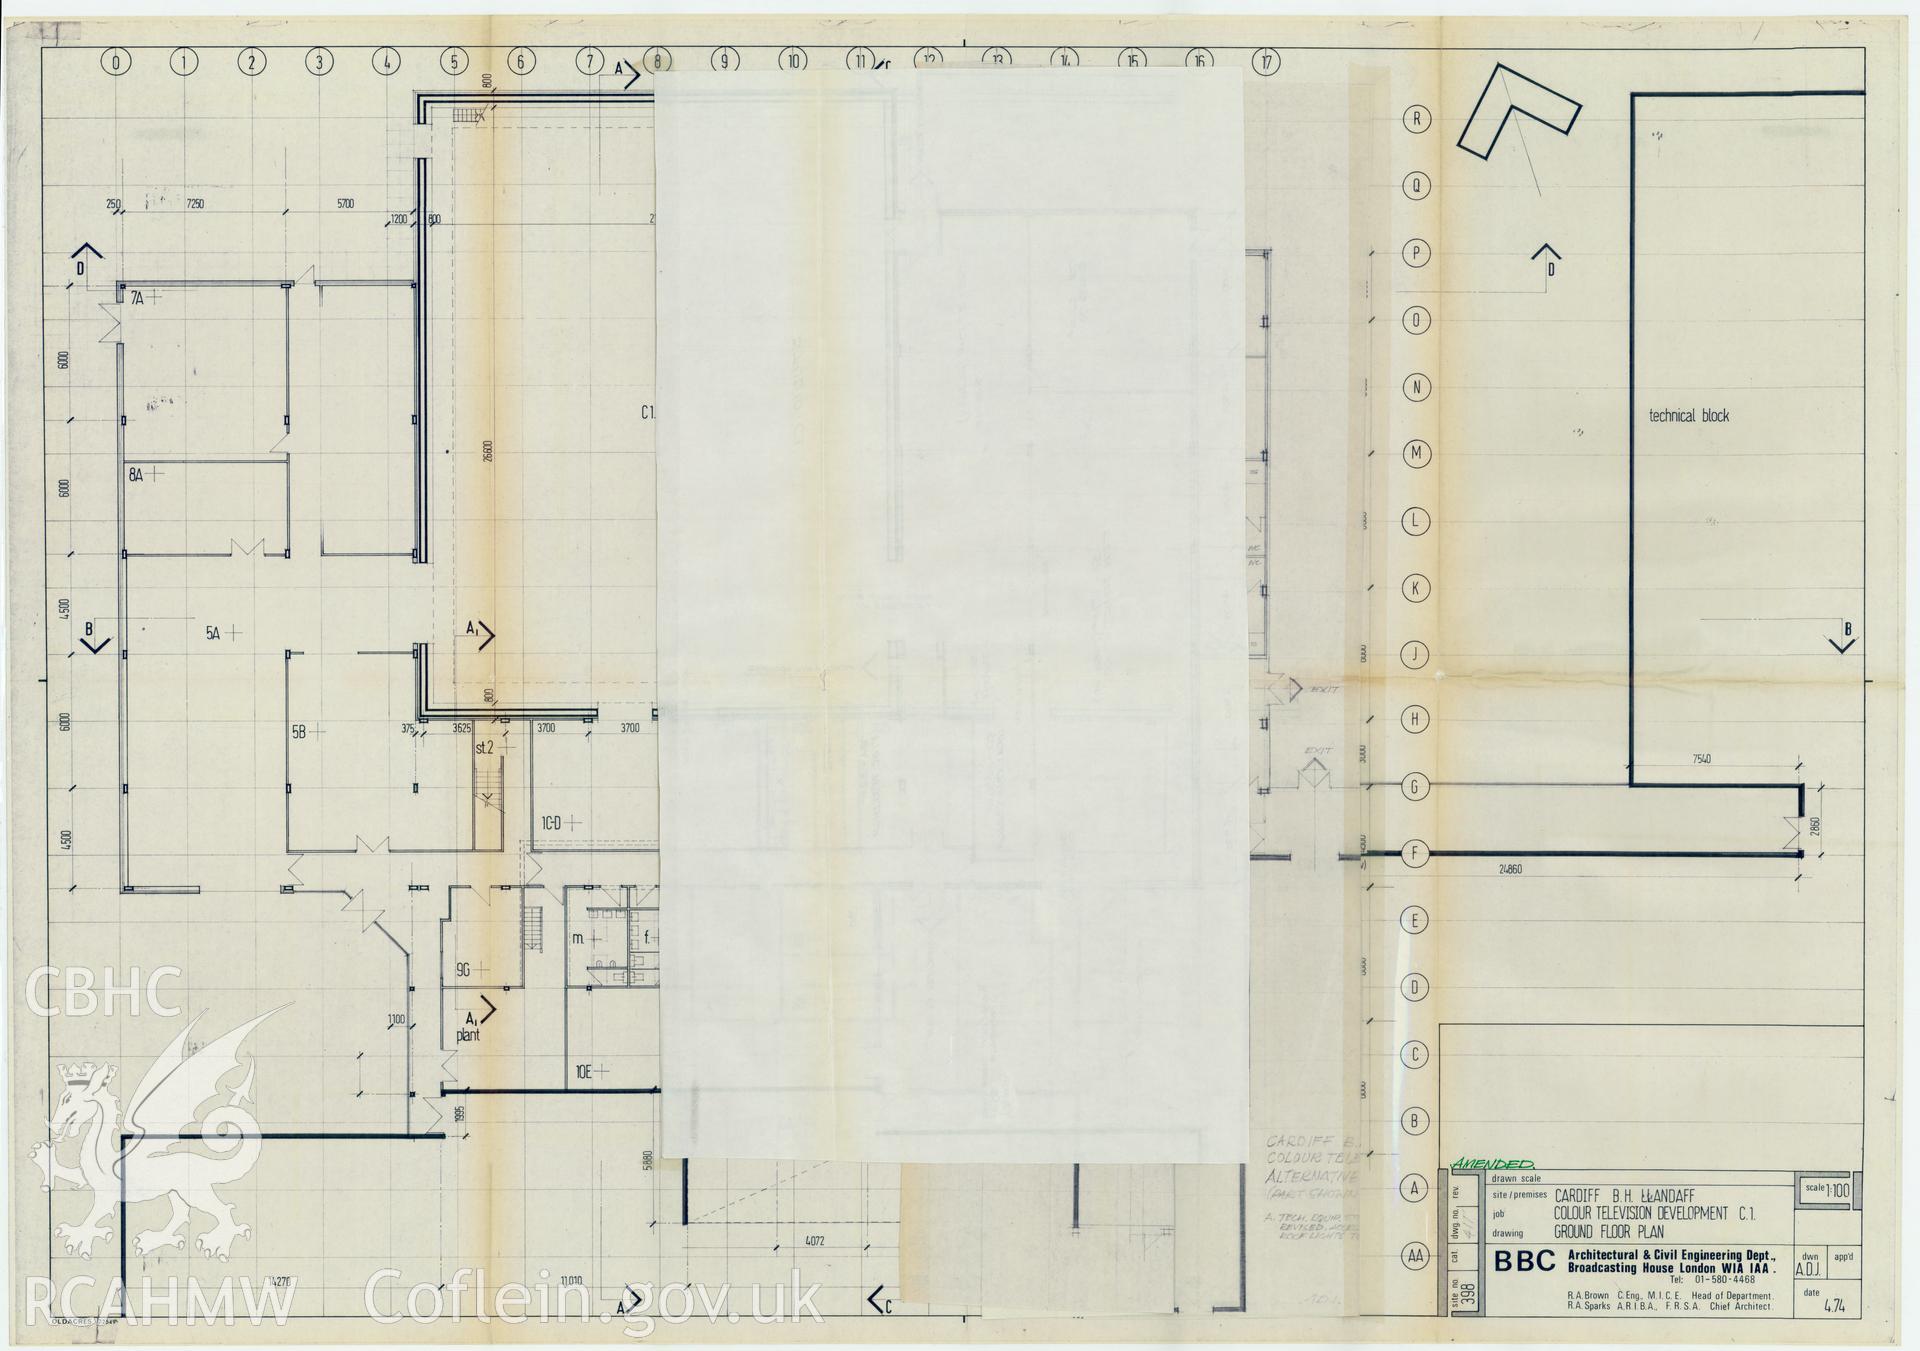 Digitised drawing plan of Llandaff production studio C1 - Colour TV Development, alternative 3 ground floor plan. Drawing no. 411e amended. May 1974.